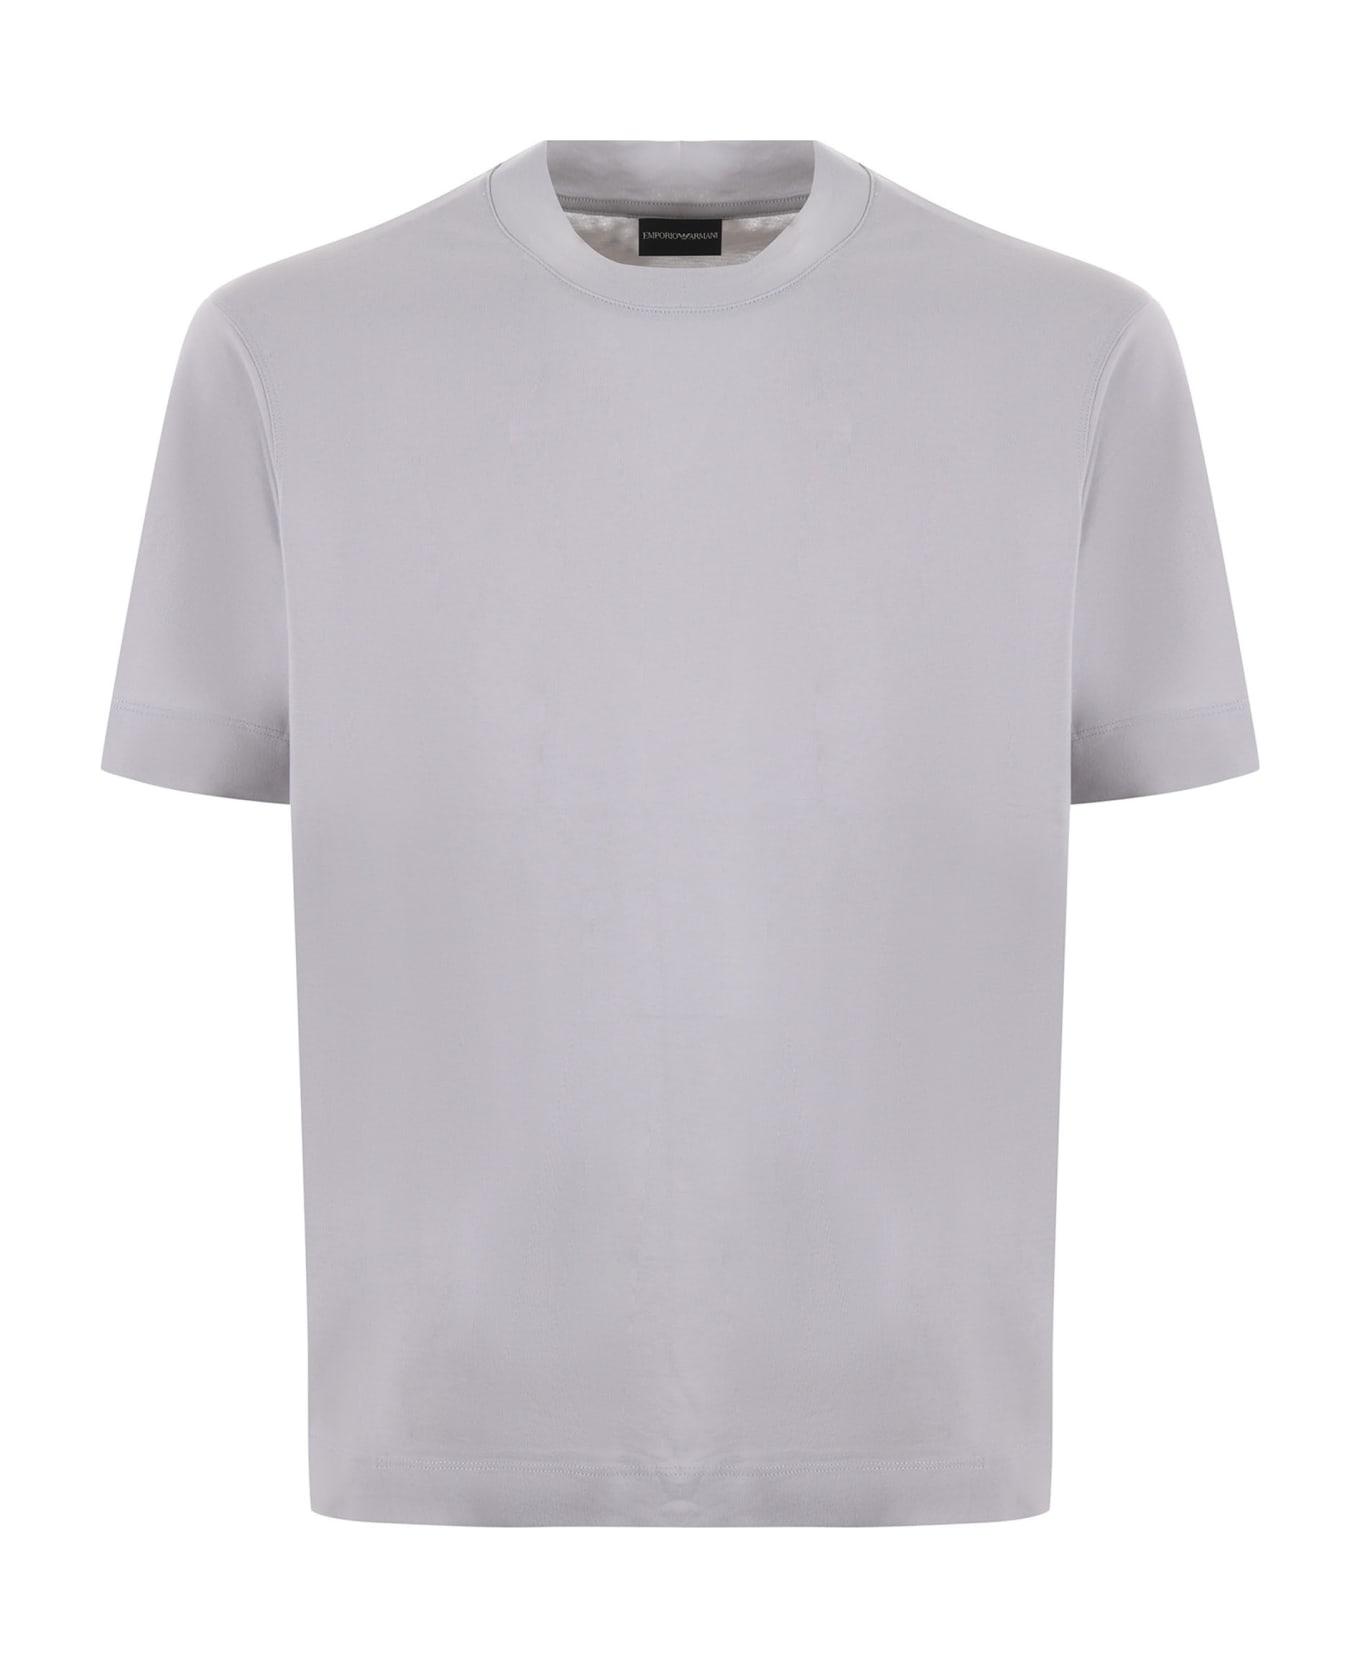 Emporio Armani T-shirt - Grigio perla